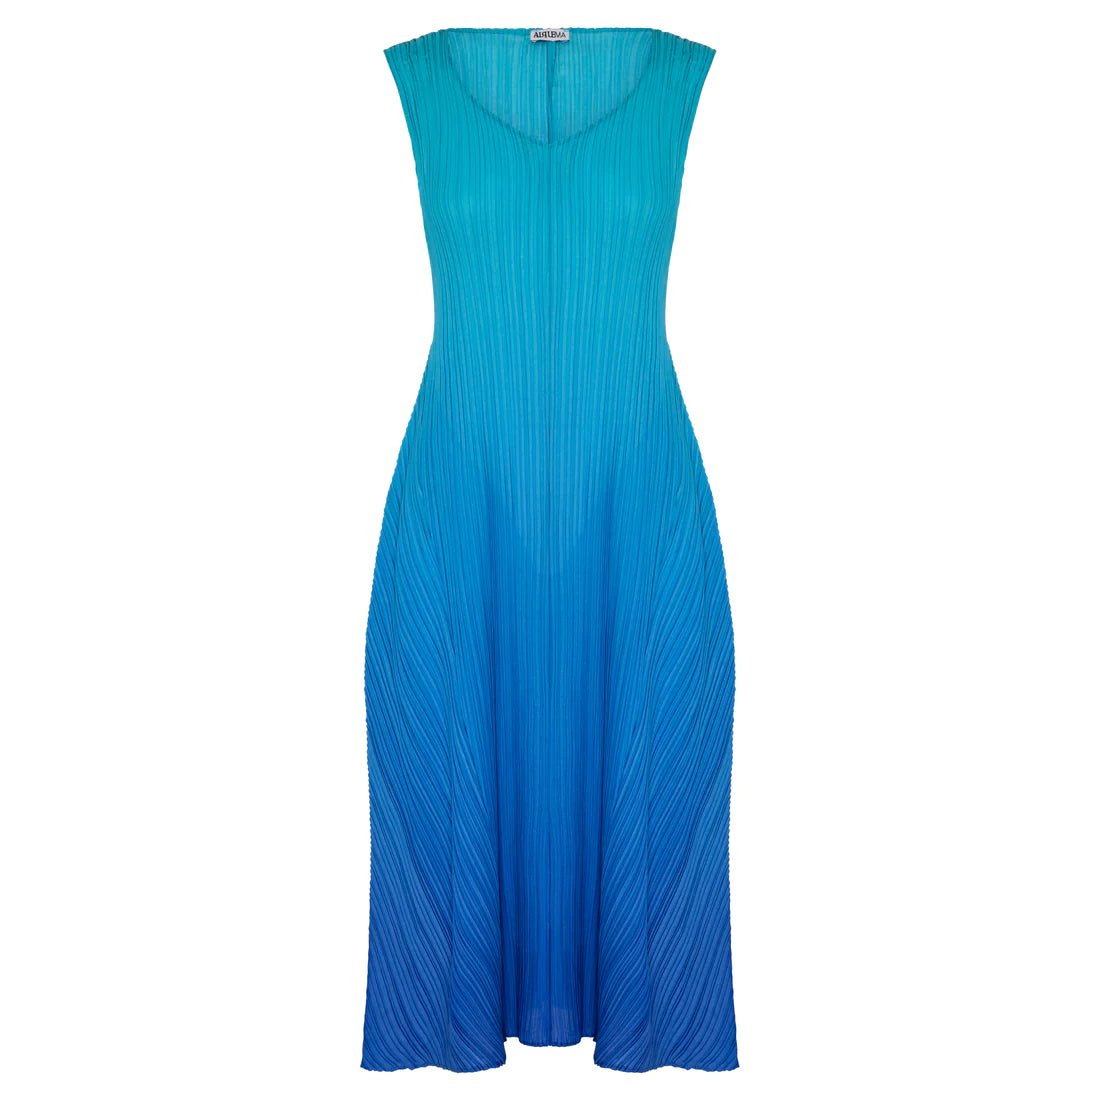 Alquema - Long Estrella Dress - Blue Bird to Dazzling Blue - Alquema - Pinkhill - darwin fashion - darwin boutique